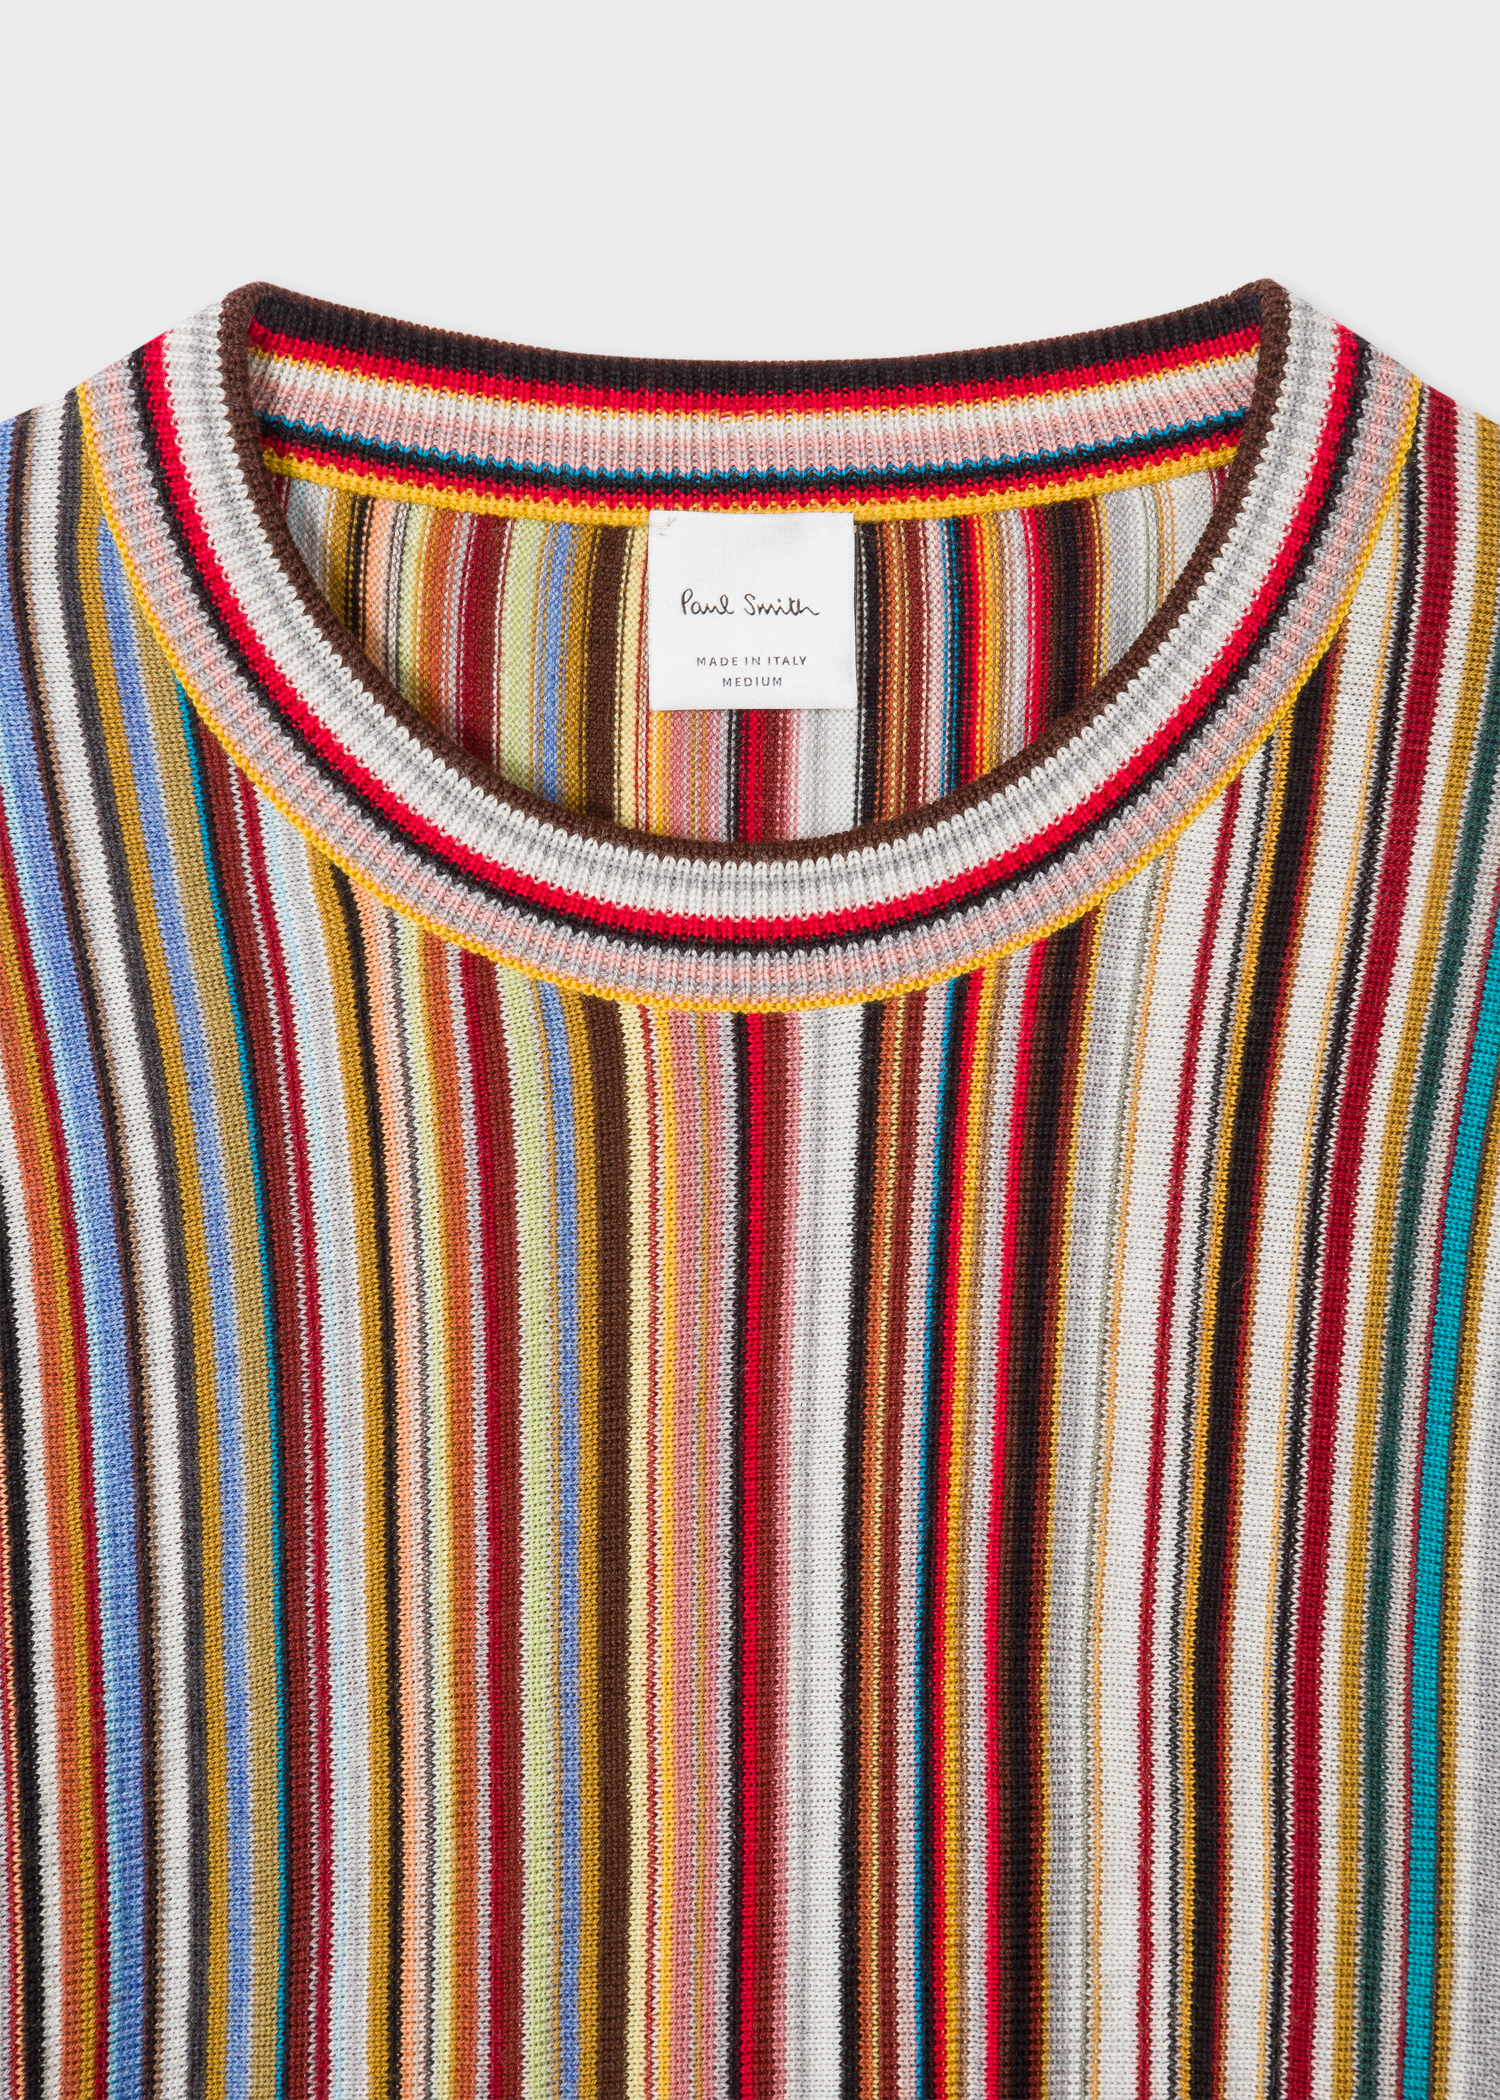 Collar view - Men's 'Signature Stripe' Wool Sweater Paul Smith